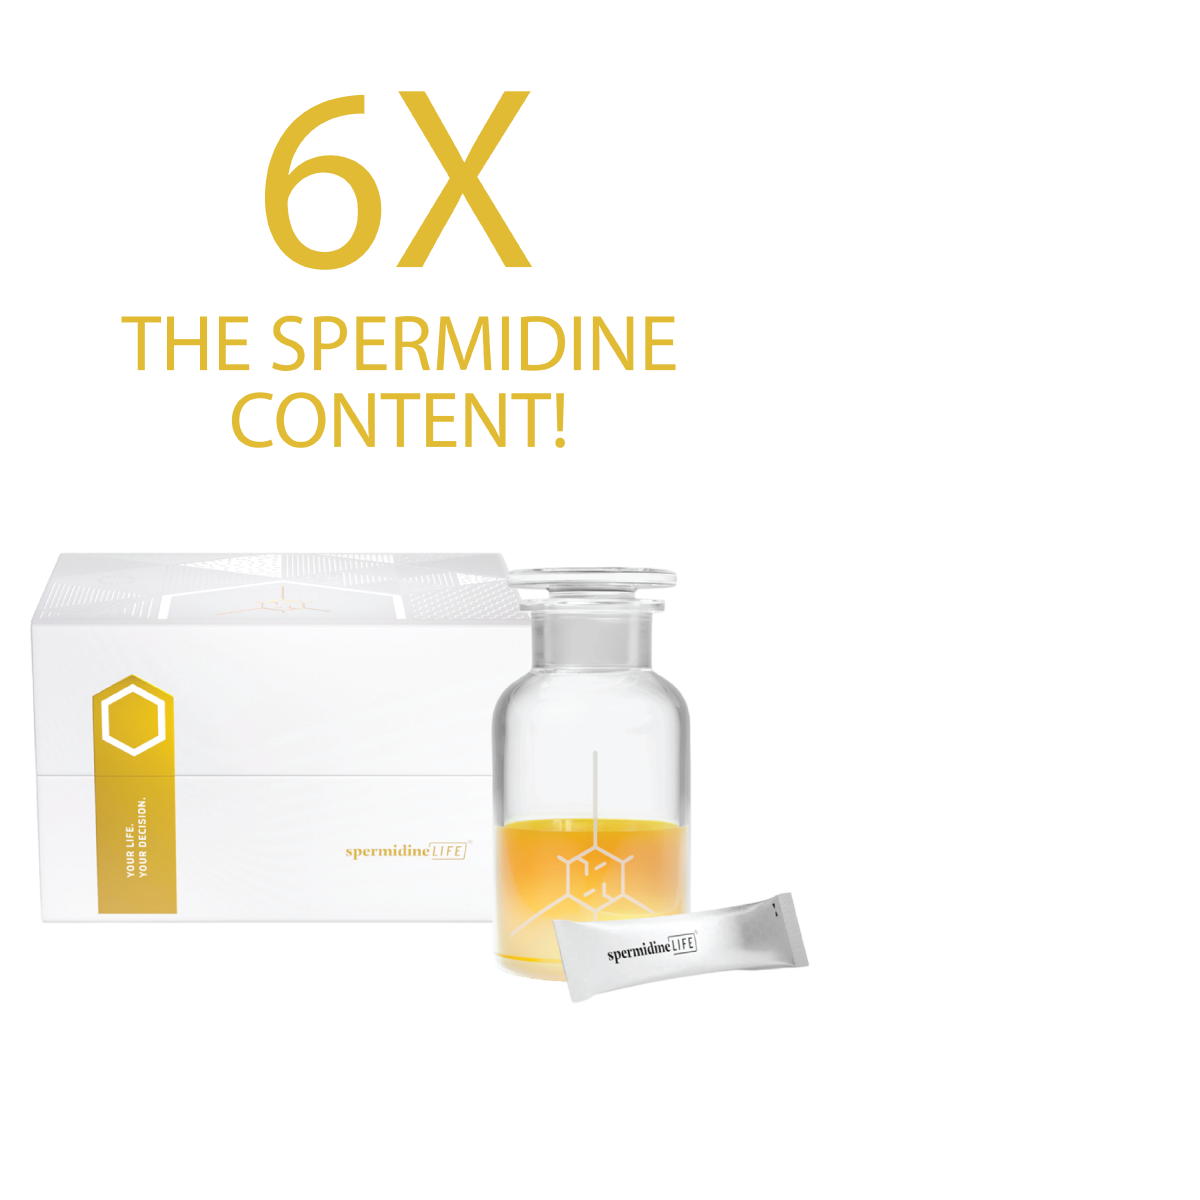 spermidineLIFE Pro - World's first professional grade spermidine supplement 6mg